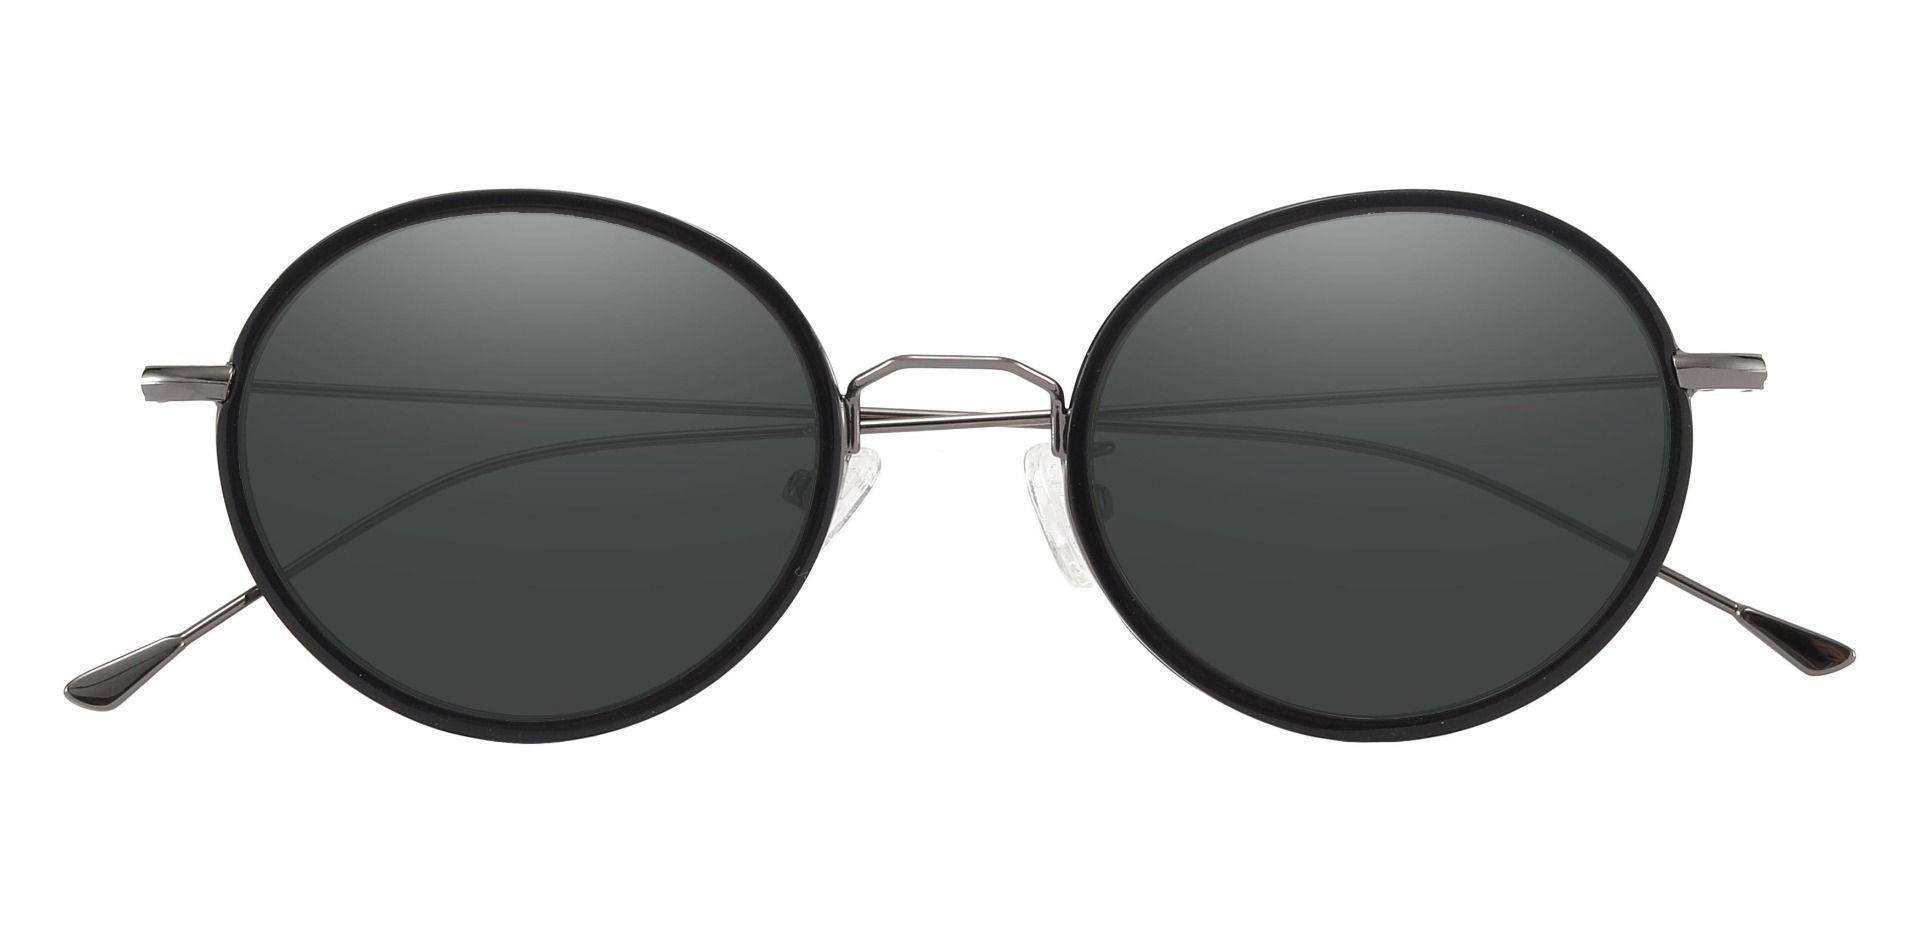 Malverne Oval Reading Sunglasses - Black Frame With Gray Lenses